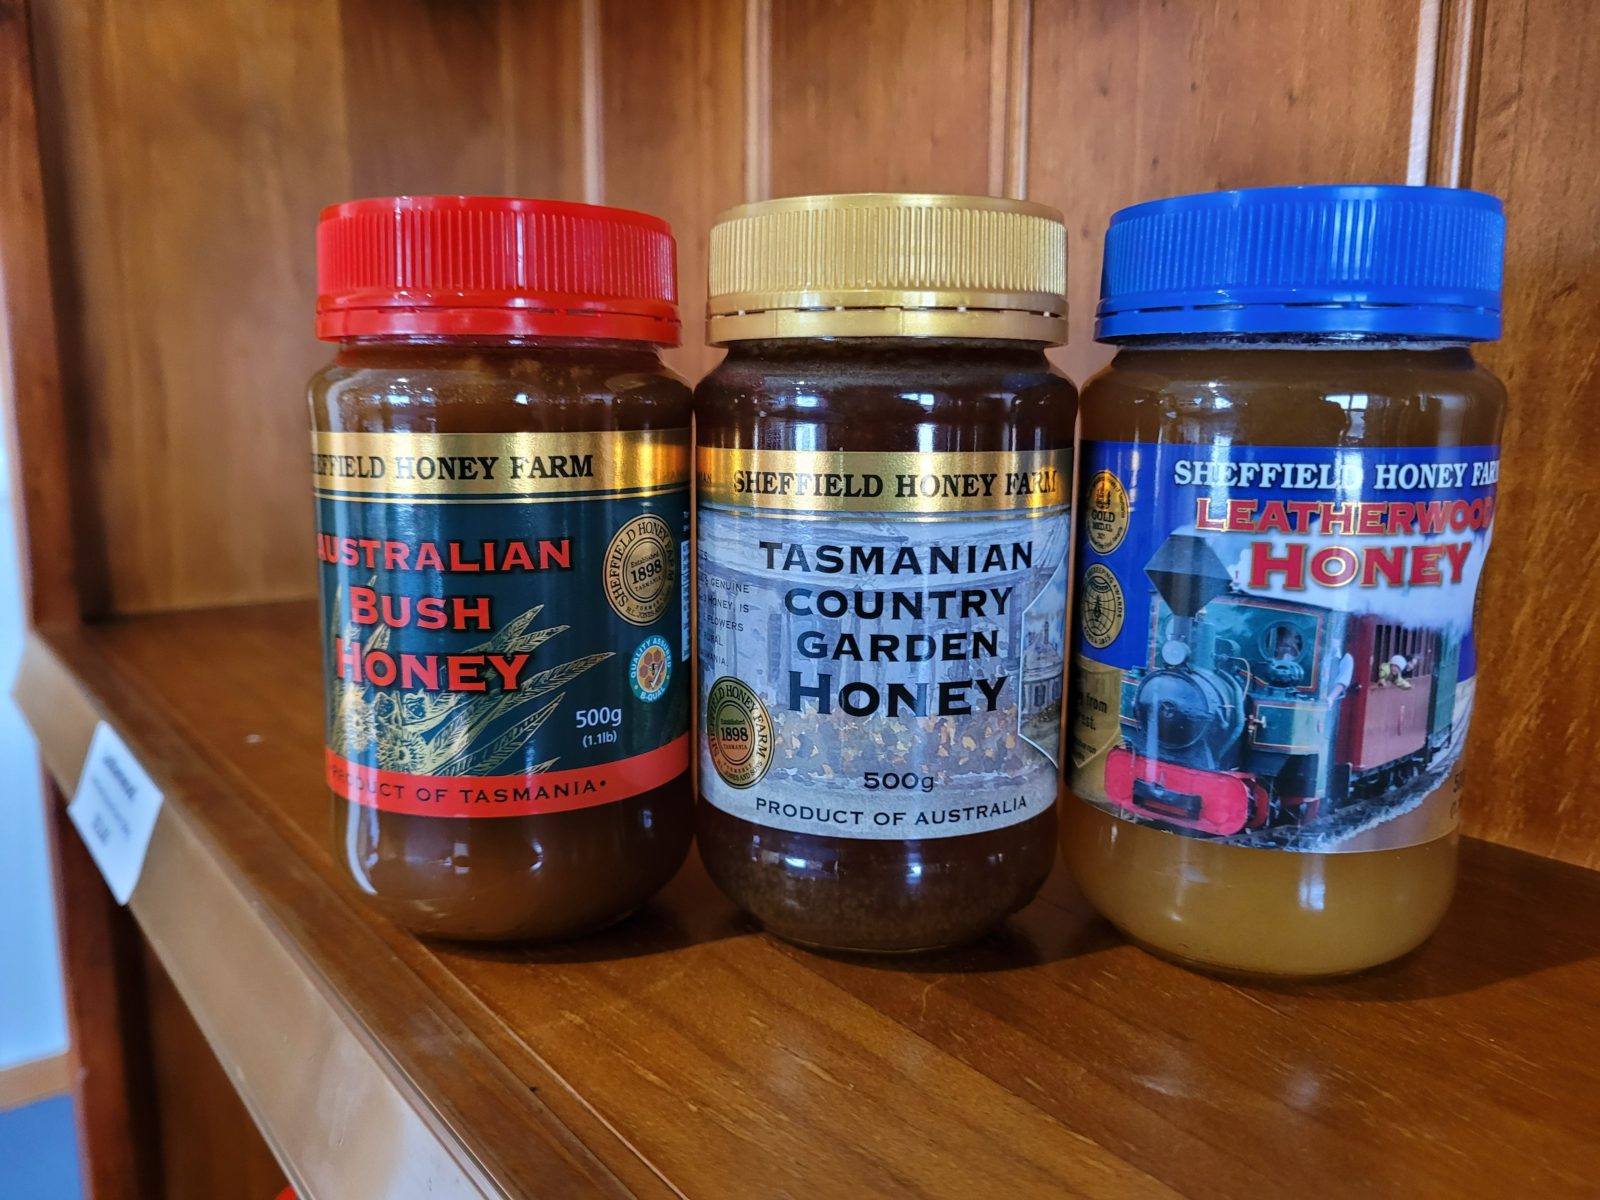 Tasmanian Leatherwood Honey, Australian Bush Honey, Tasmanian Country Garden Honey